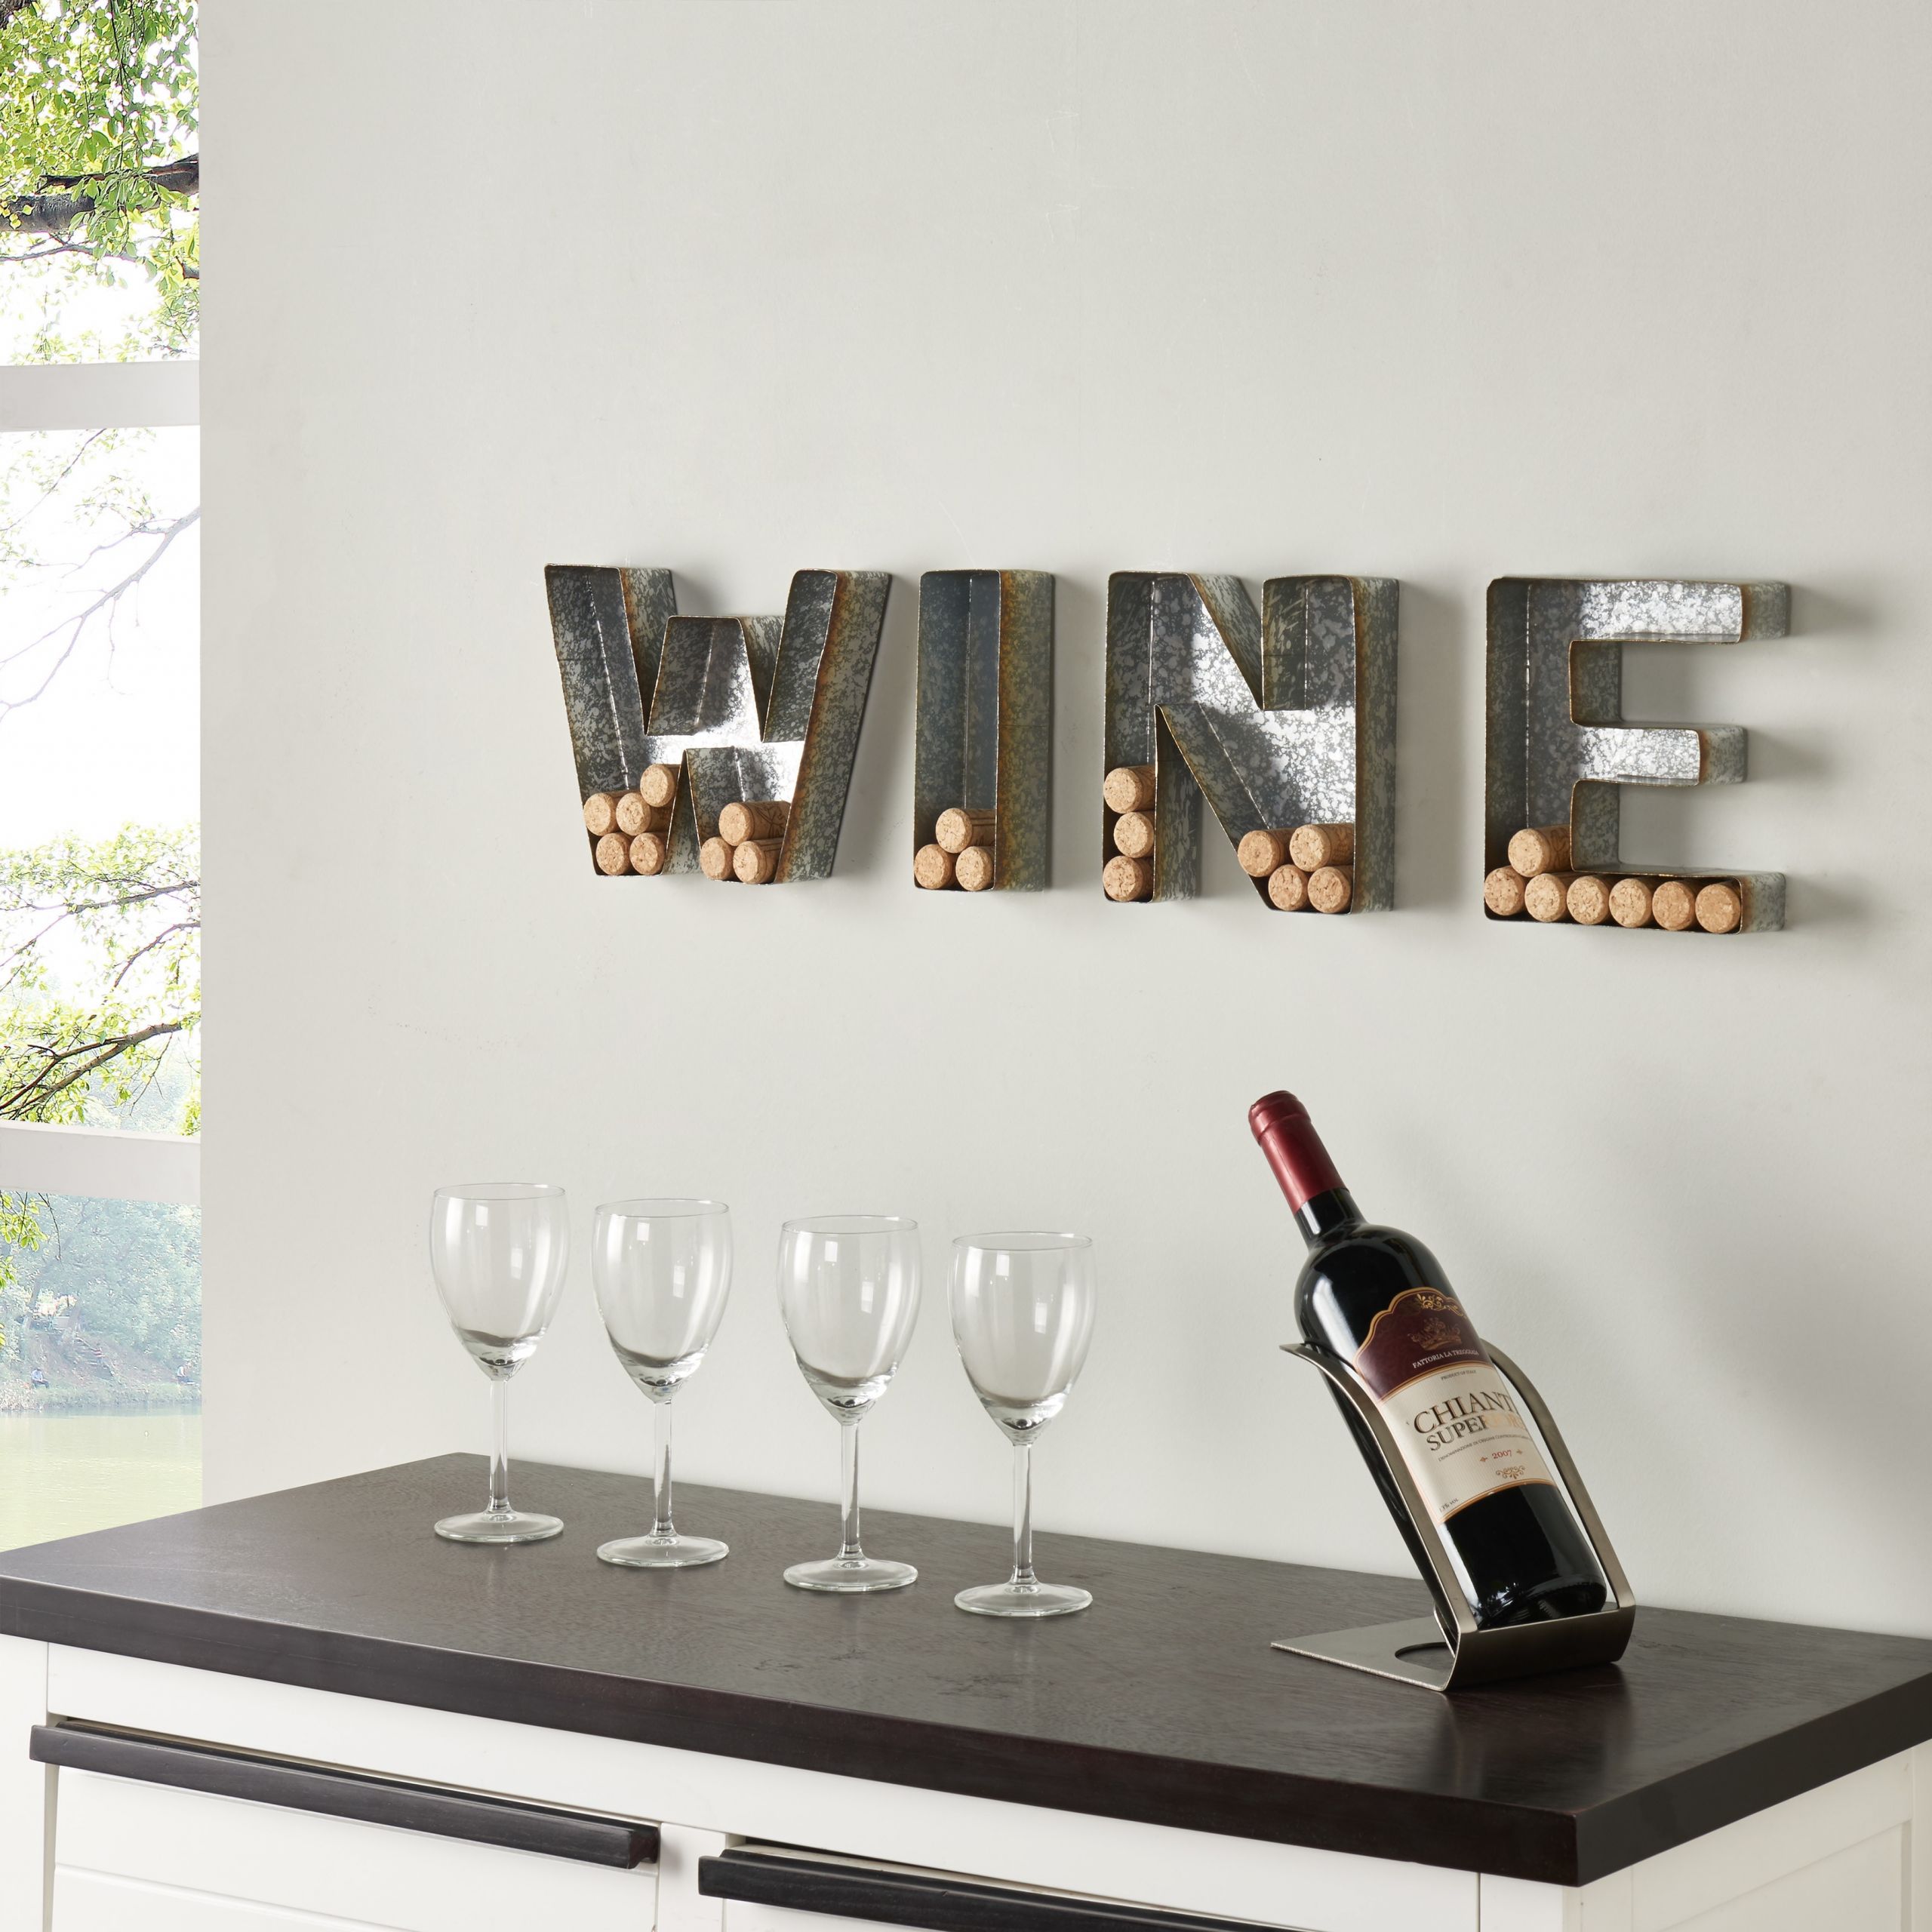 Wine Wall Decor For Kitchen
 WINE Wall Decor Cork Holder Metal Home Bar Kitchen Rustic